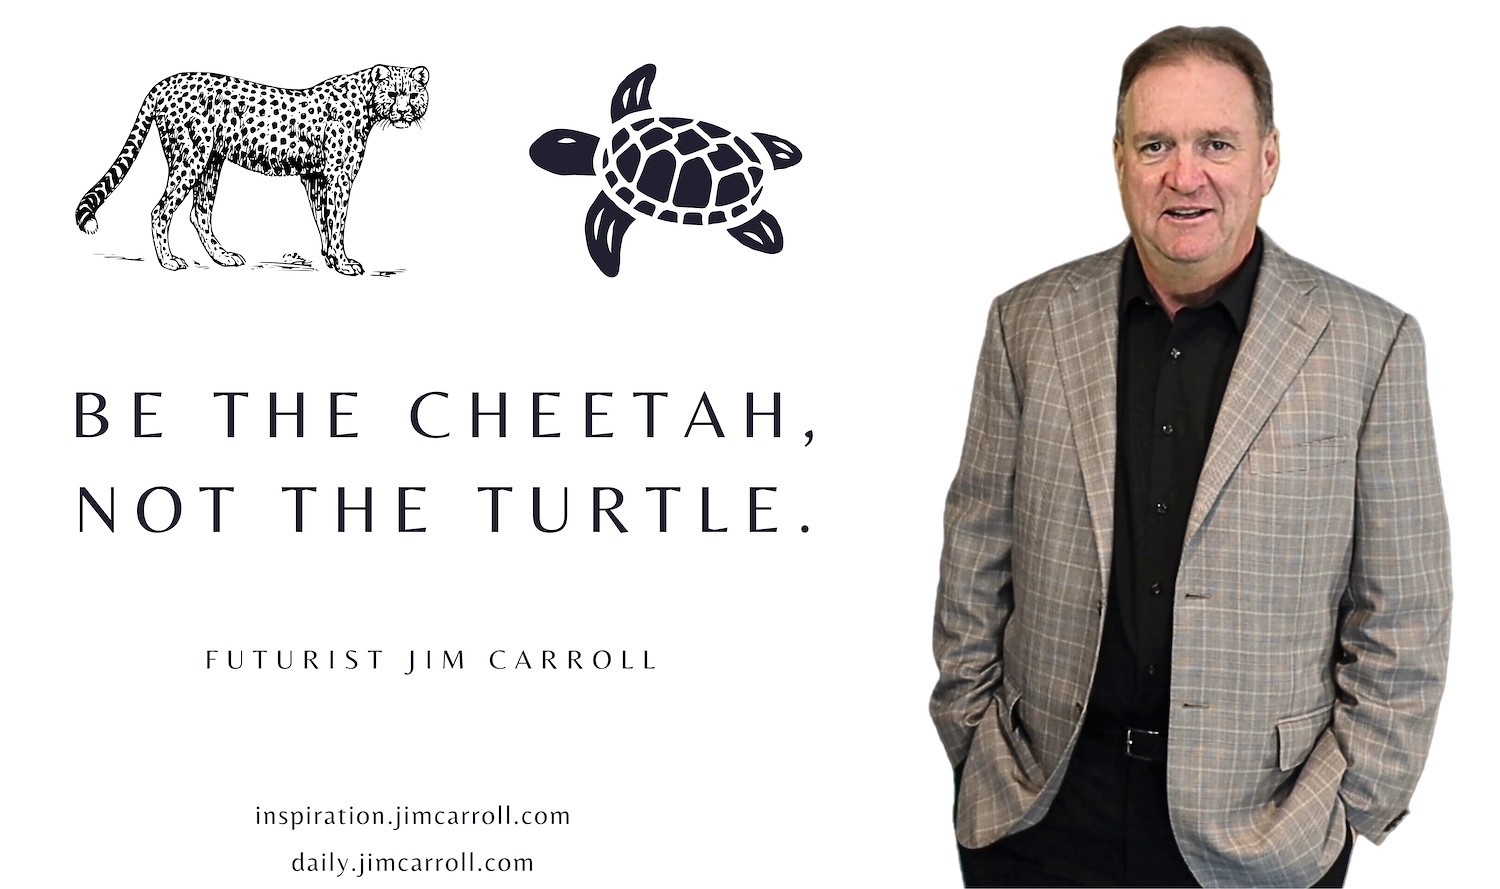 BeTheC"Be the cheetah, not the turtle" - Futurist Jim Carroll